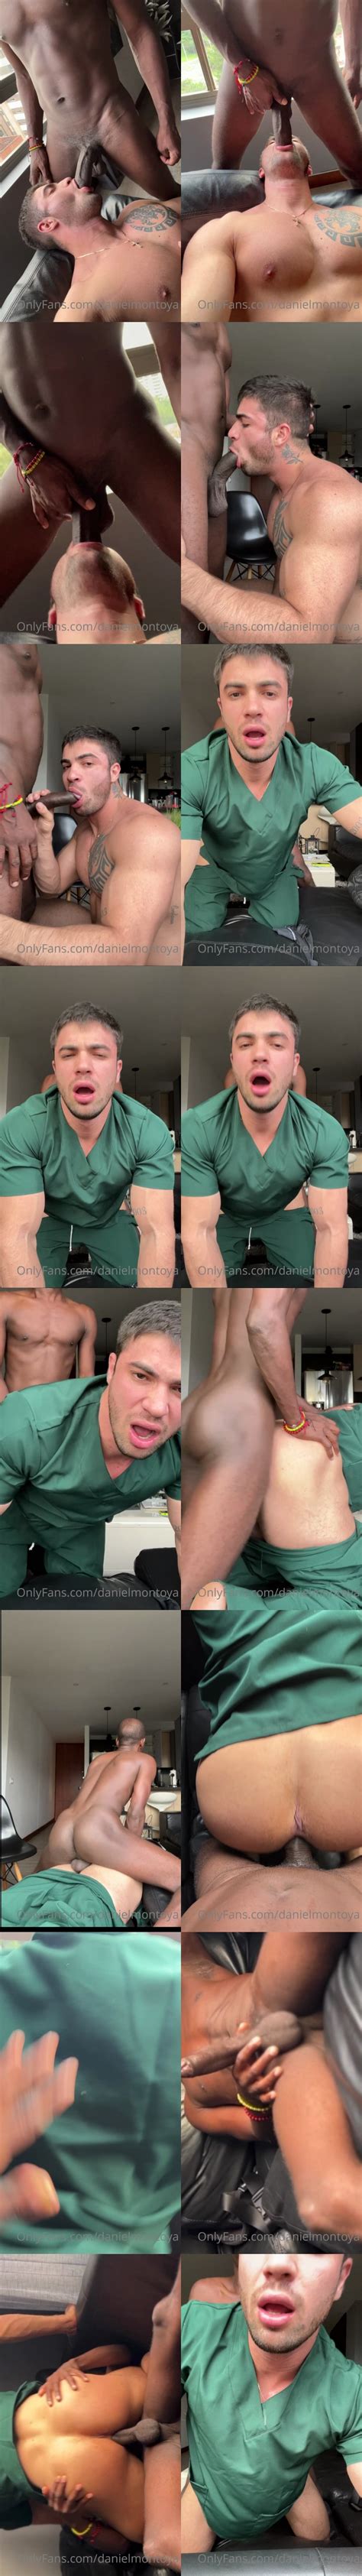 Onlyfans Ptv Daniel Montoya Interracial Doctor Sex Video Hot Men